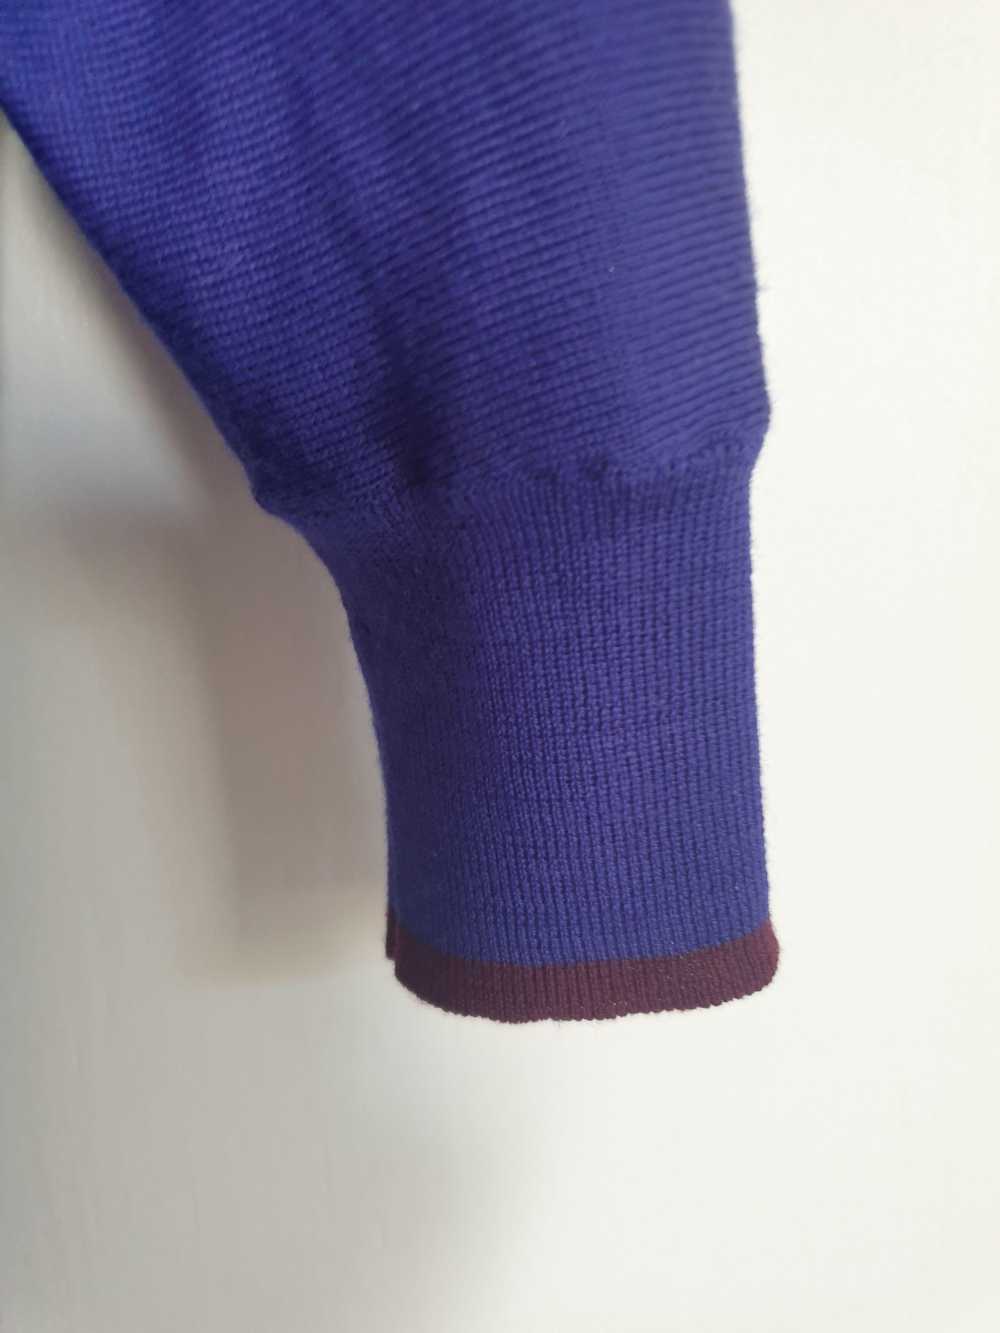 Emilio Pucci Purple wool fine knit jumper dress - image 7